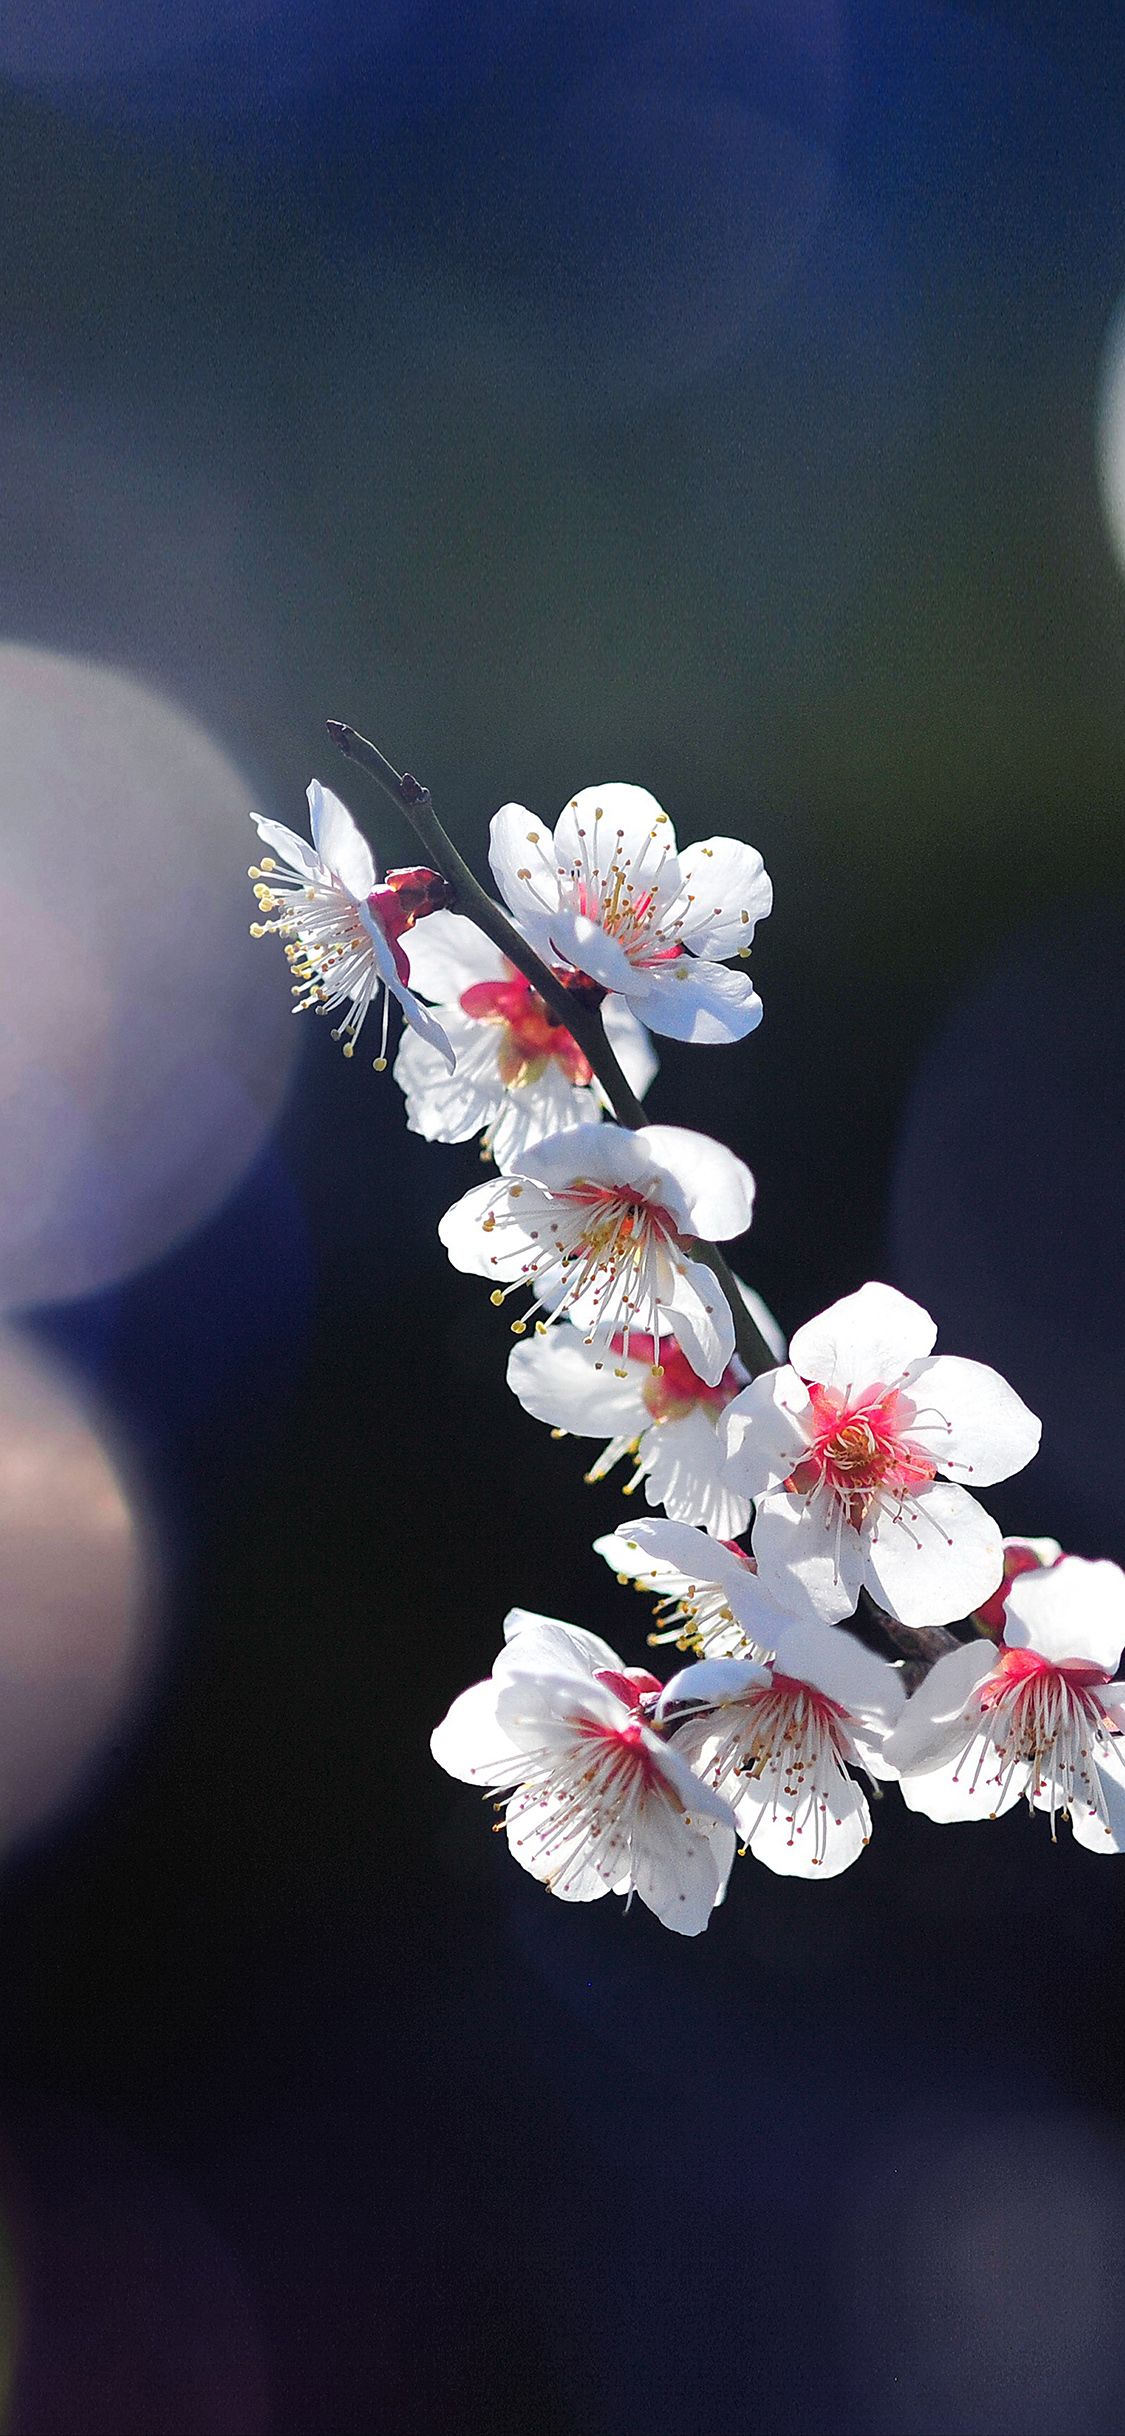 iPhone X wallpaper. spring flower sakura nature tree flare happy